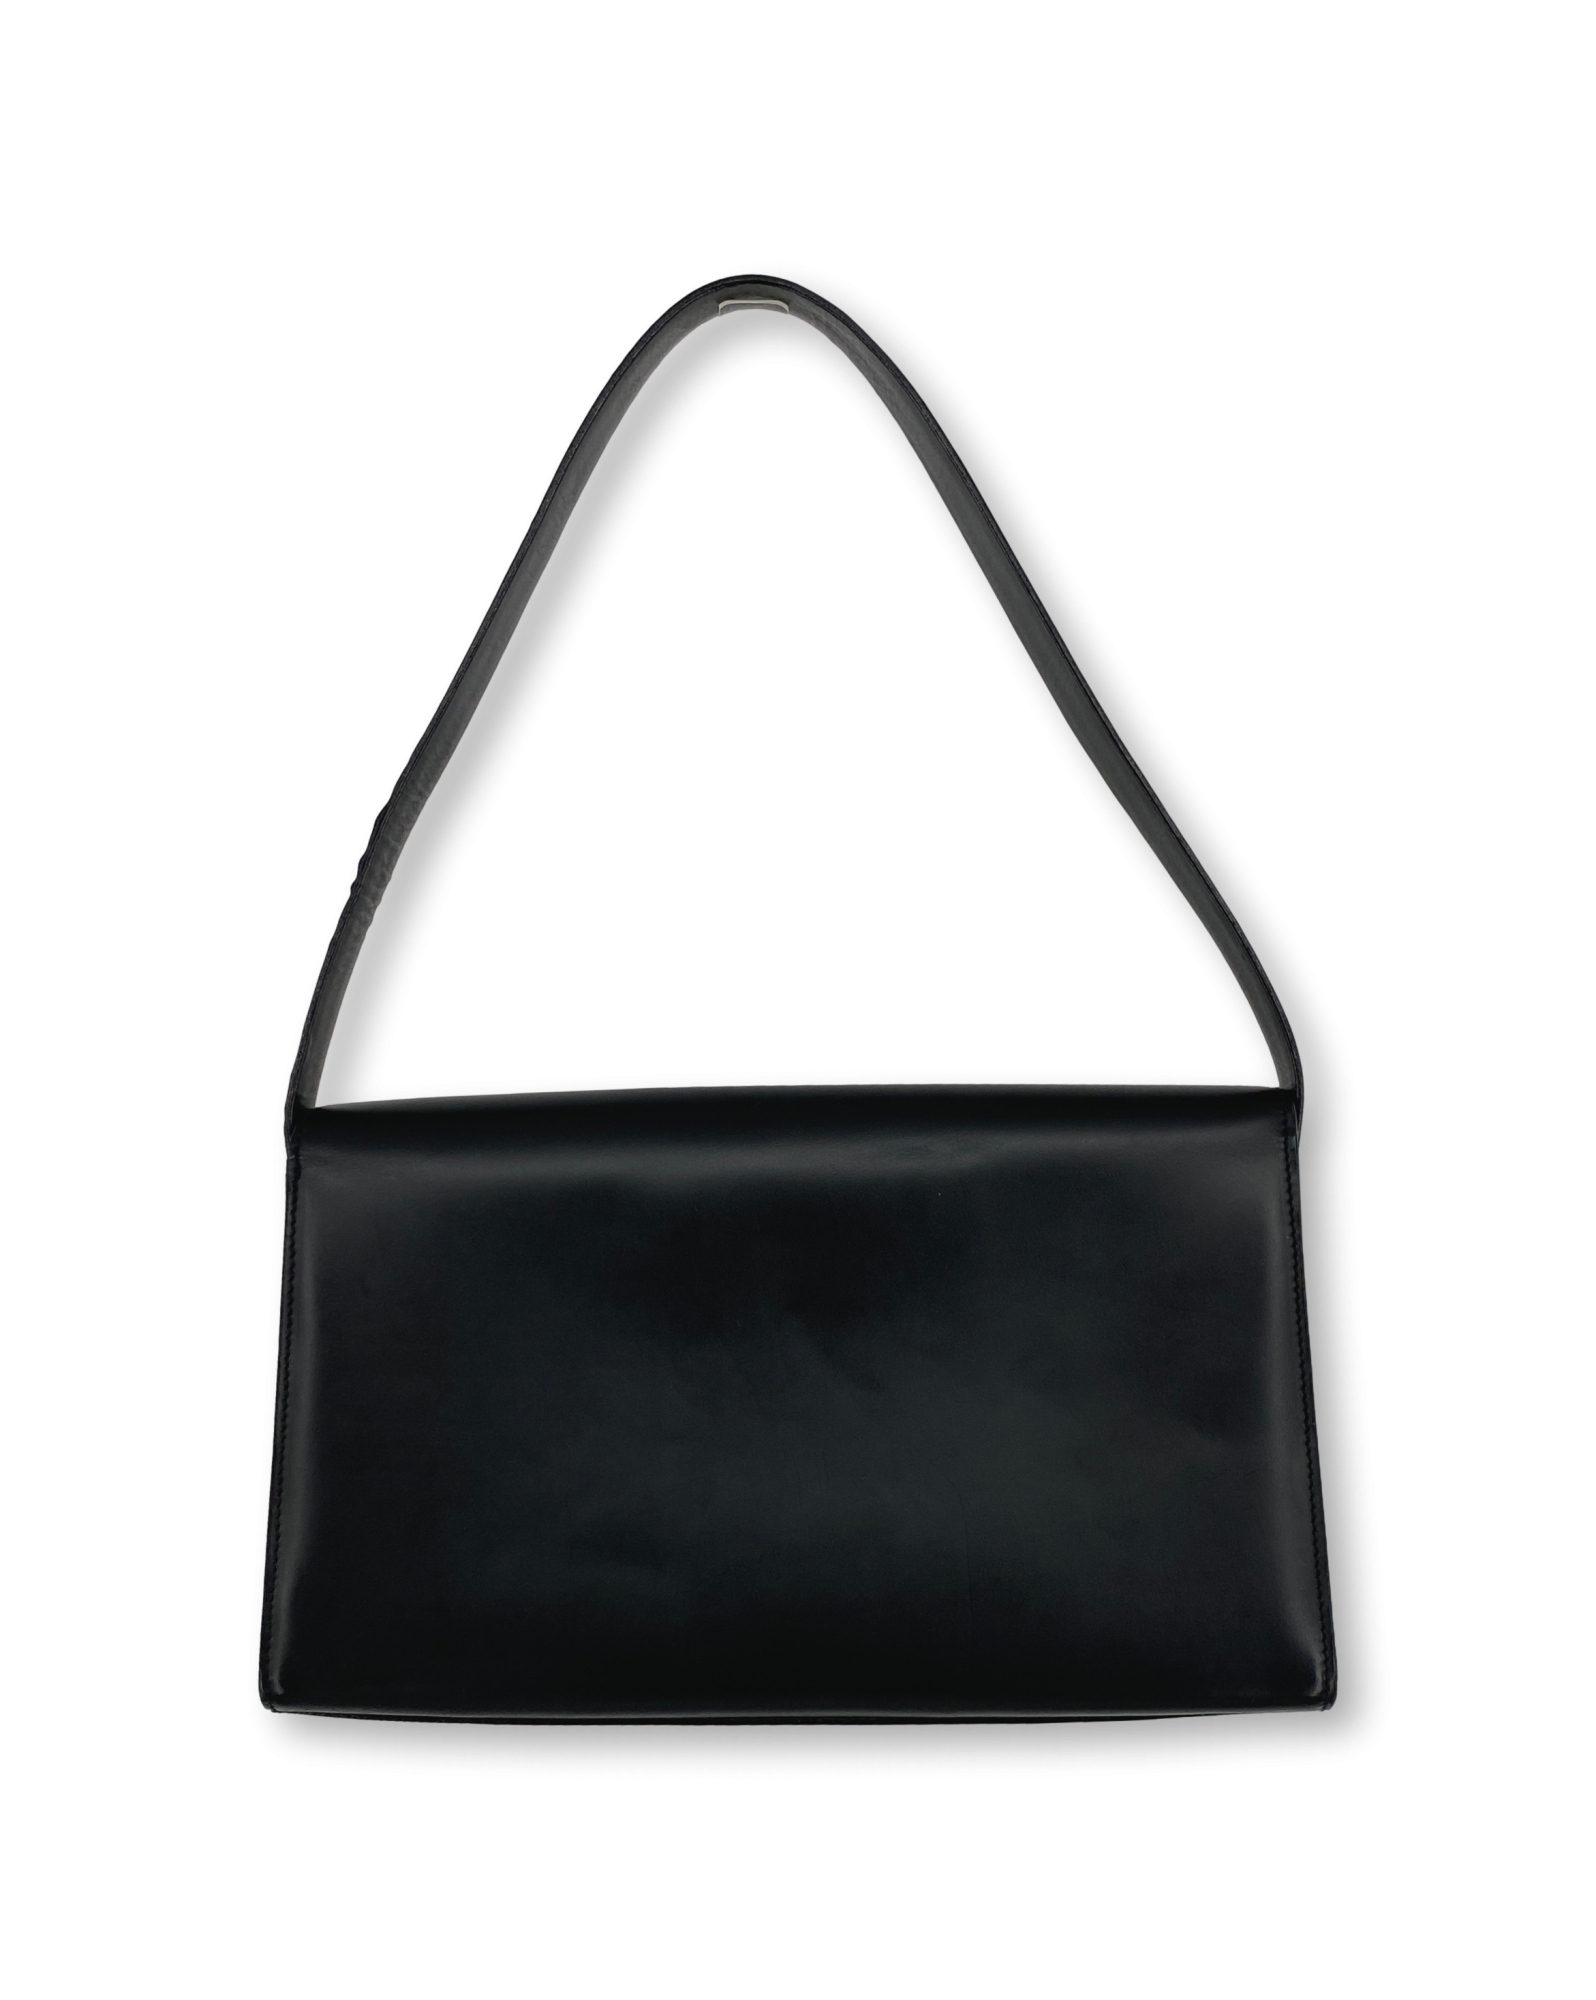 Gucci, Bags, Vintage Gucci Black Baguette Shoulder Bag